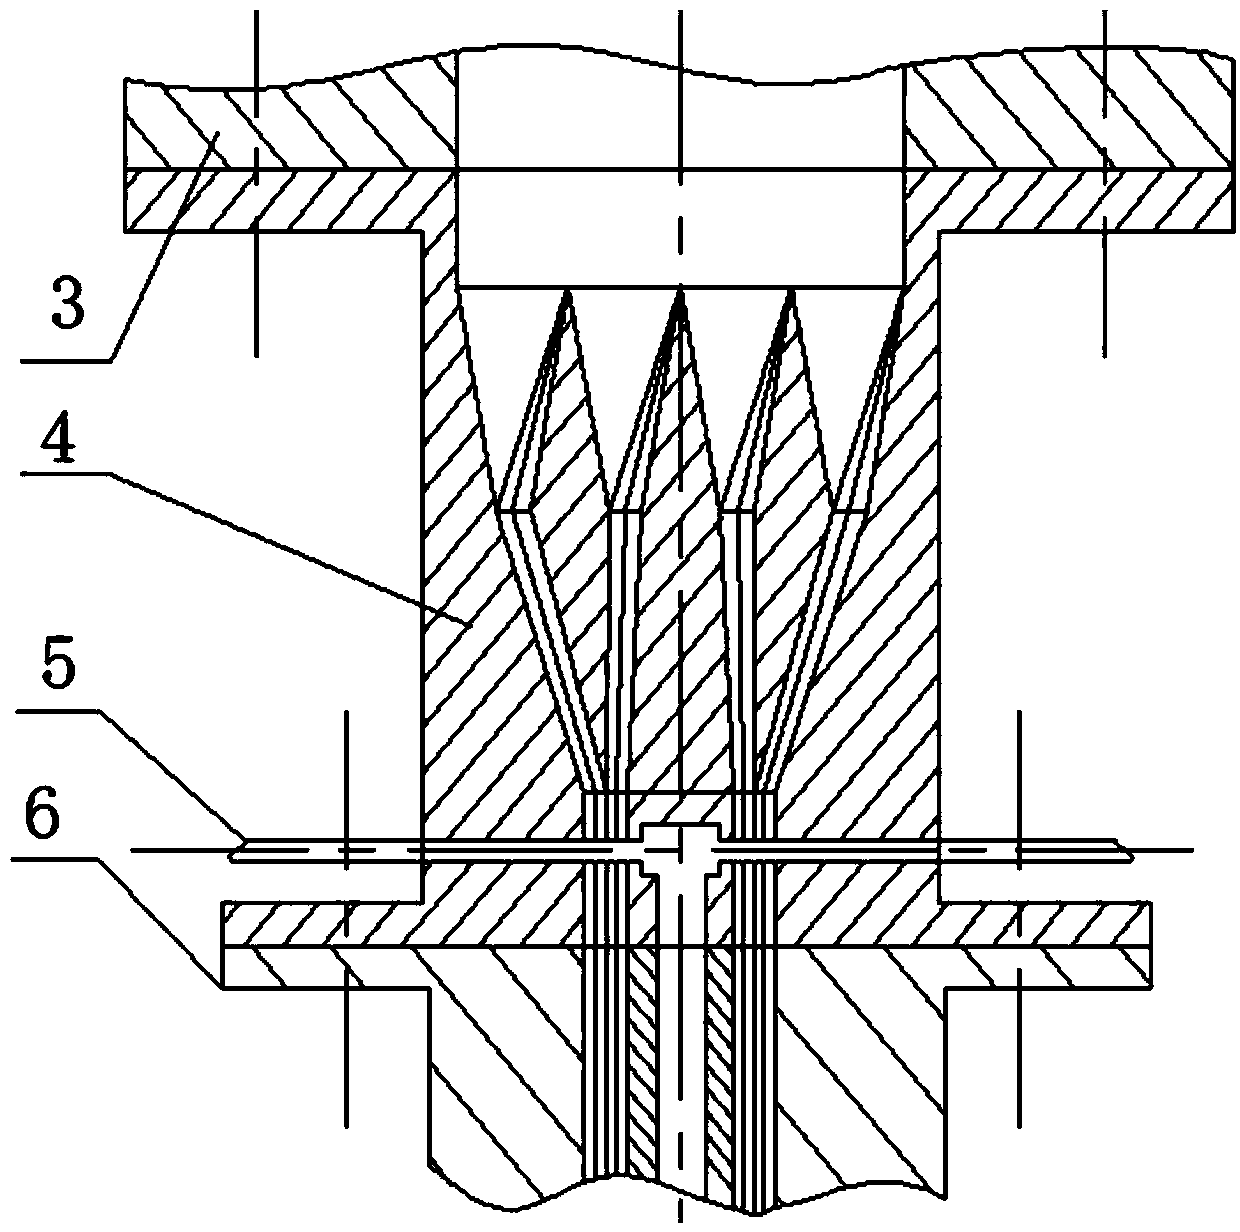 Melt electrostatic spinning device and method based on calculus cascade